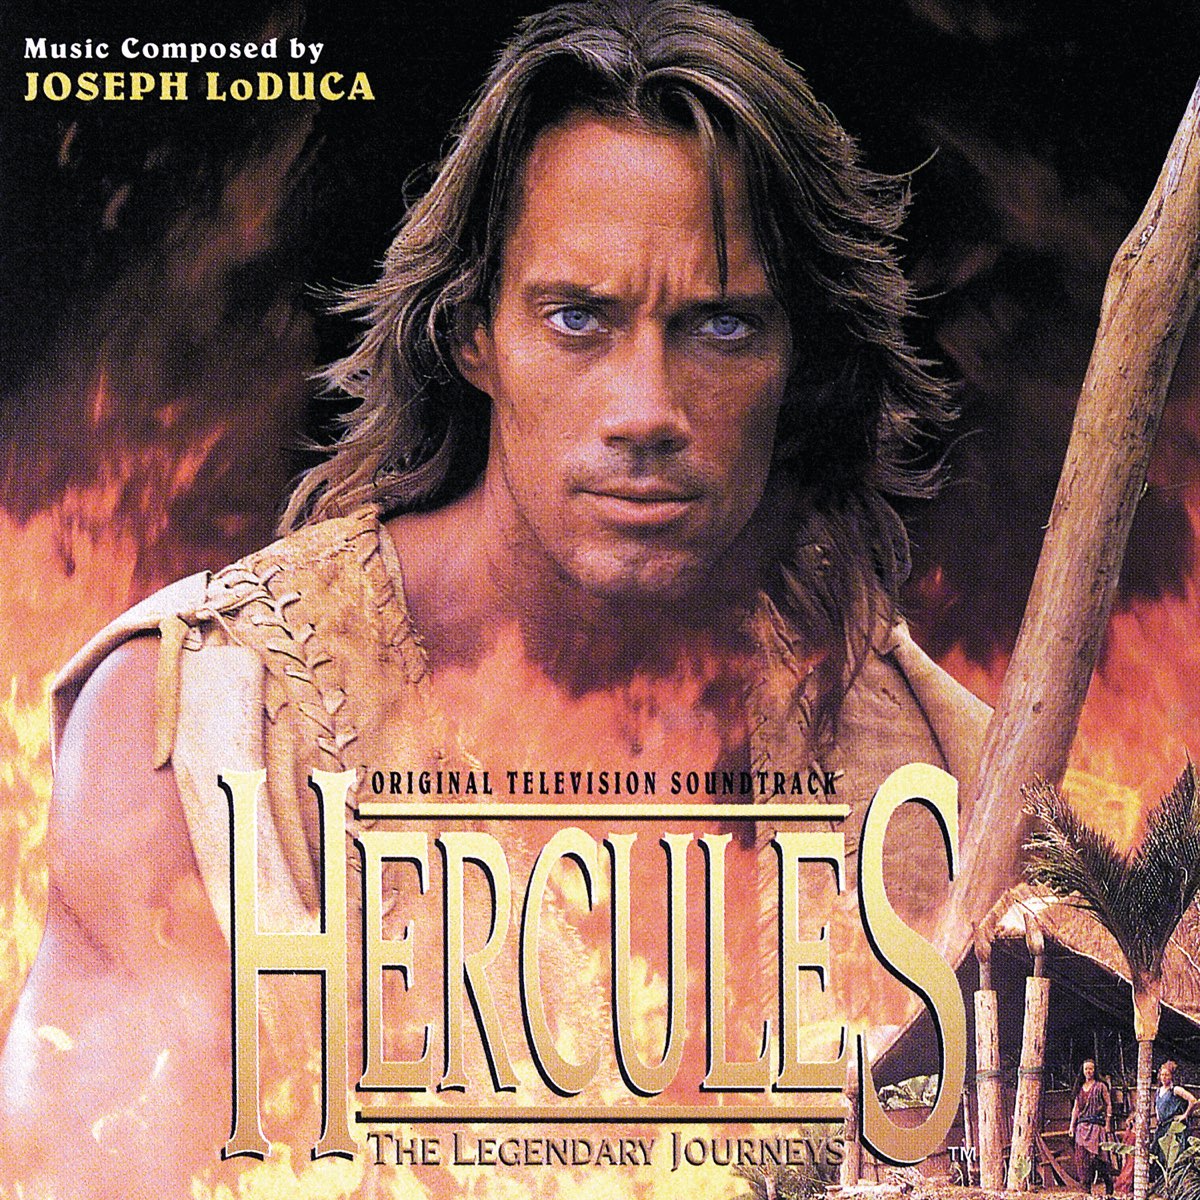 ‎hercules The Legendary Journeys Original Television Soundtrack By Joseph Loduca On Apple Music 0650